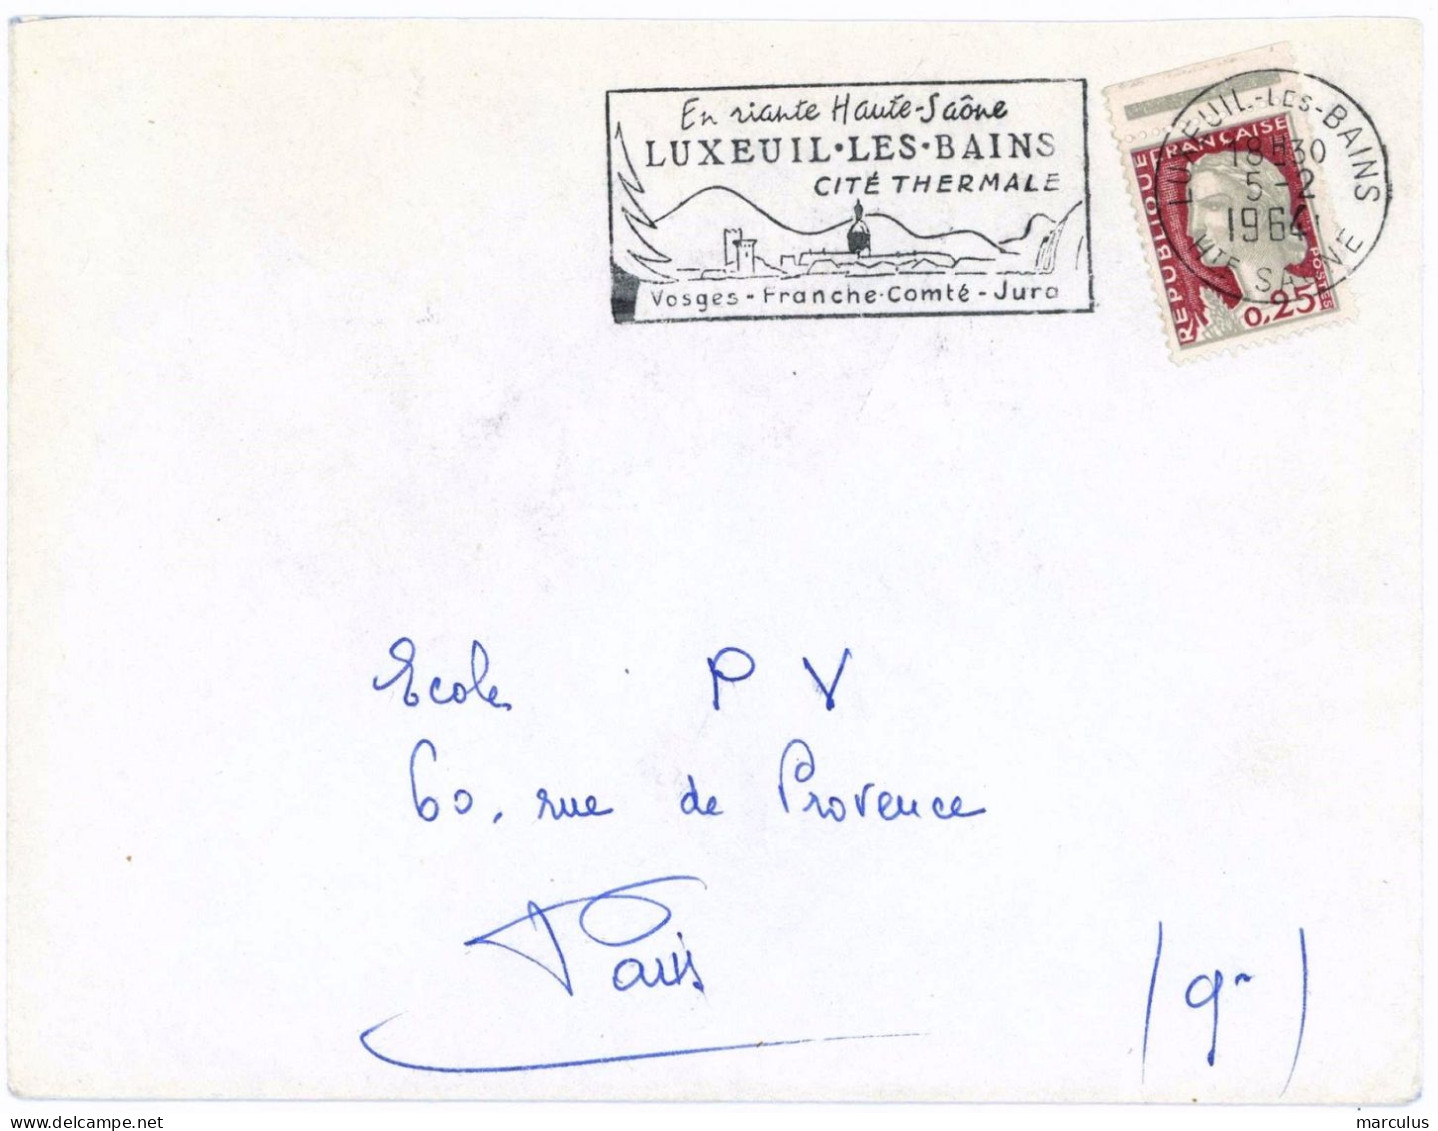 LUXEUIL - Les - BAINS Hte SAONE 1964 : Année Grands Chiffres - Mechanical Postmarks (Advertisement)